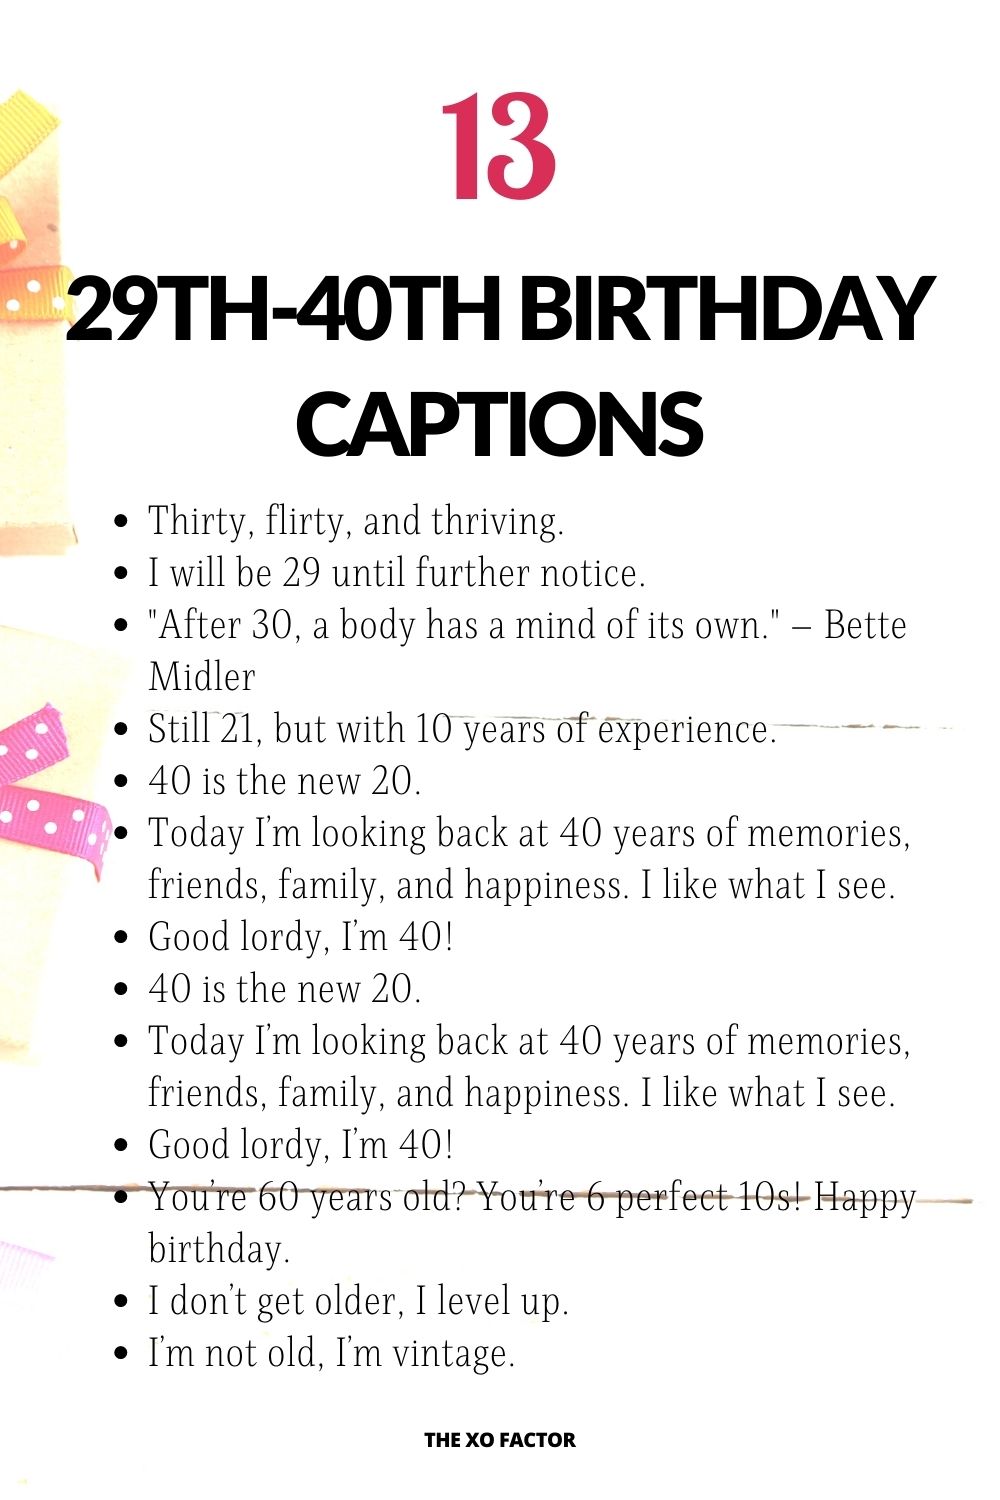 29th-40th Birthday Captions